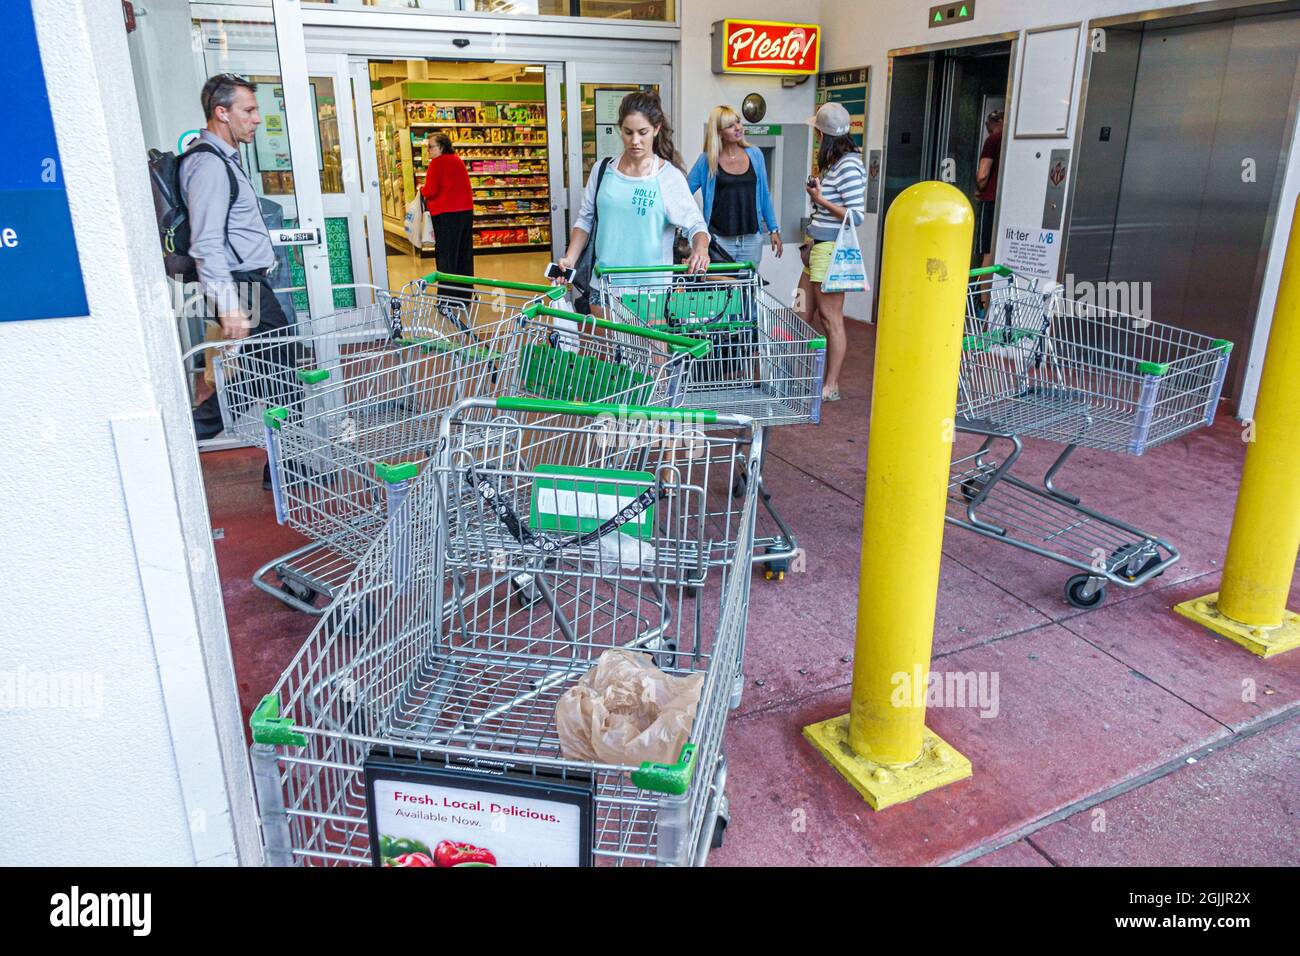 Miami Beach Florida,Publix grocery store supermarket,entrance blocked blocking fire exit safety hazard shopping carts trolleys, Stock Photo